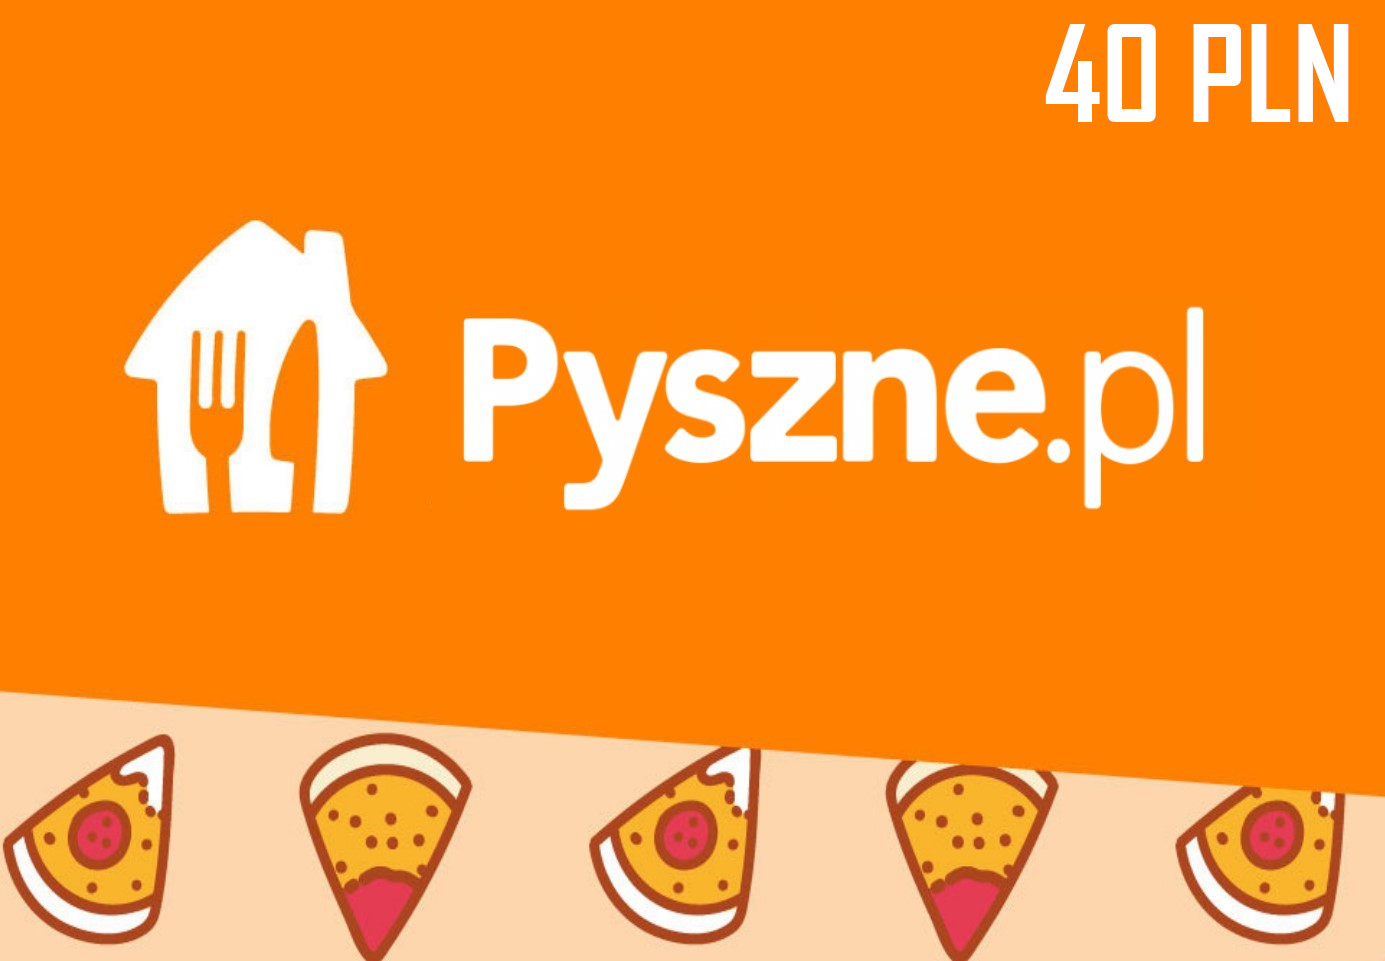 Pyszne.pl 40 PLN Gift Card PL $11.82